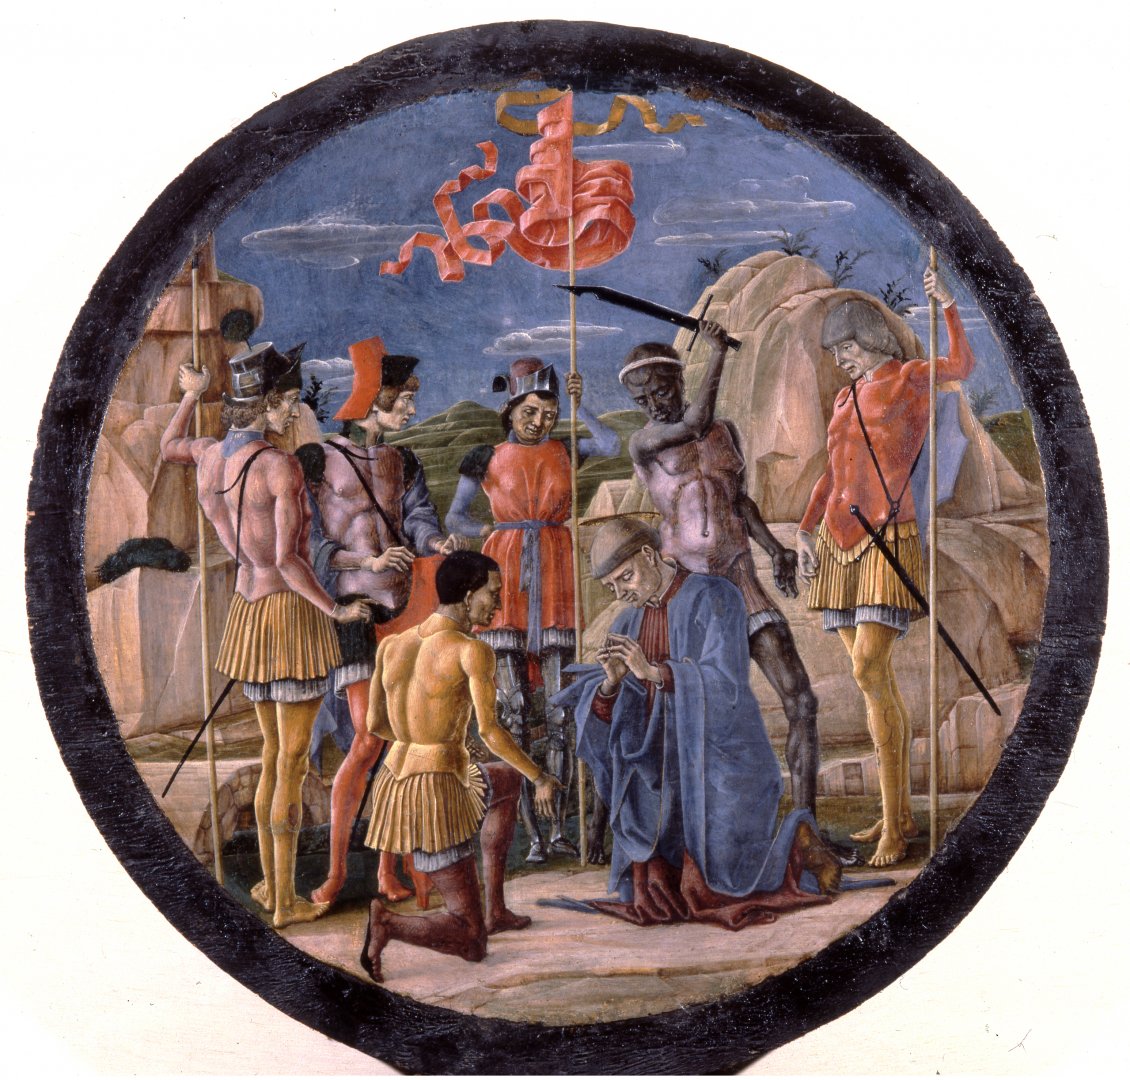 CosmÃ¨ Tura, Martirio di san Maurelio (1480 circa; olio su tavola, diametro 48 cm; Ferrara, Gallerie Estensi, Pinacoteca Nazionale)
